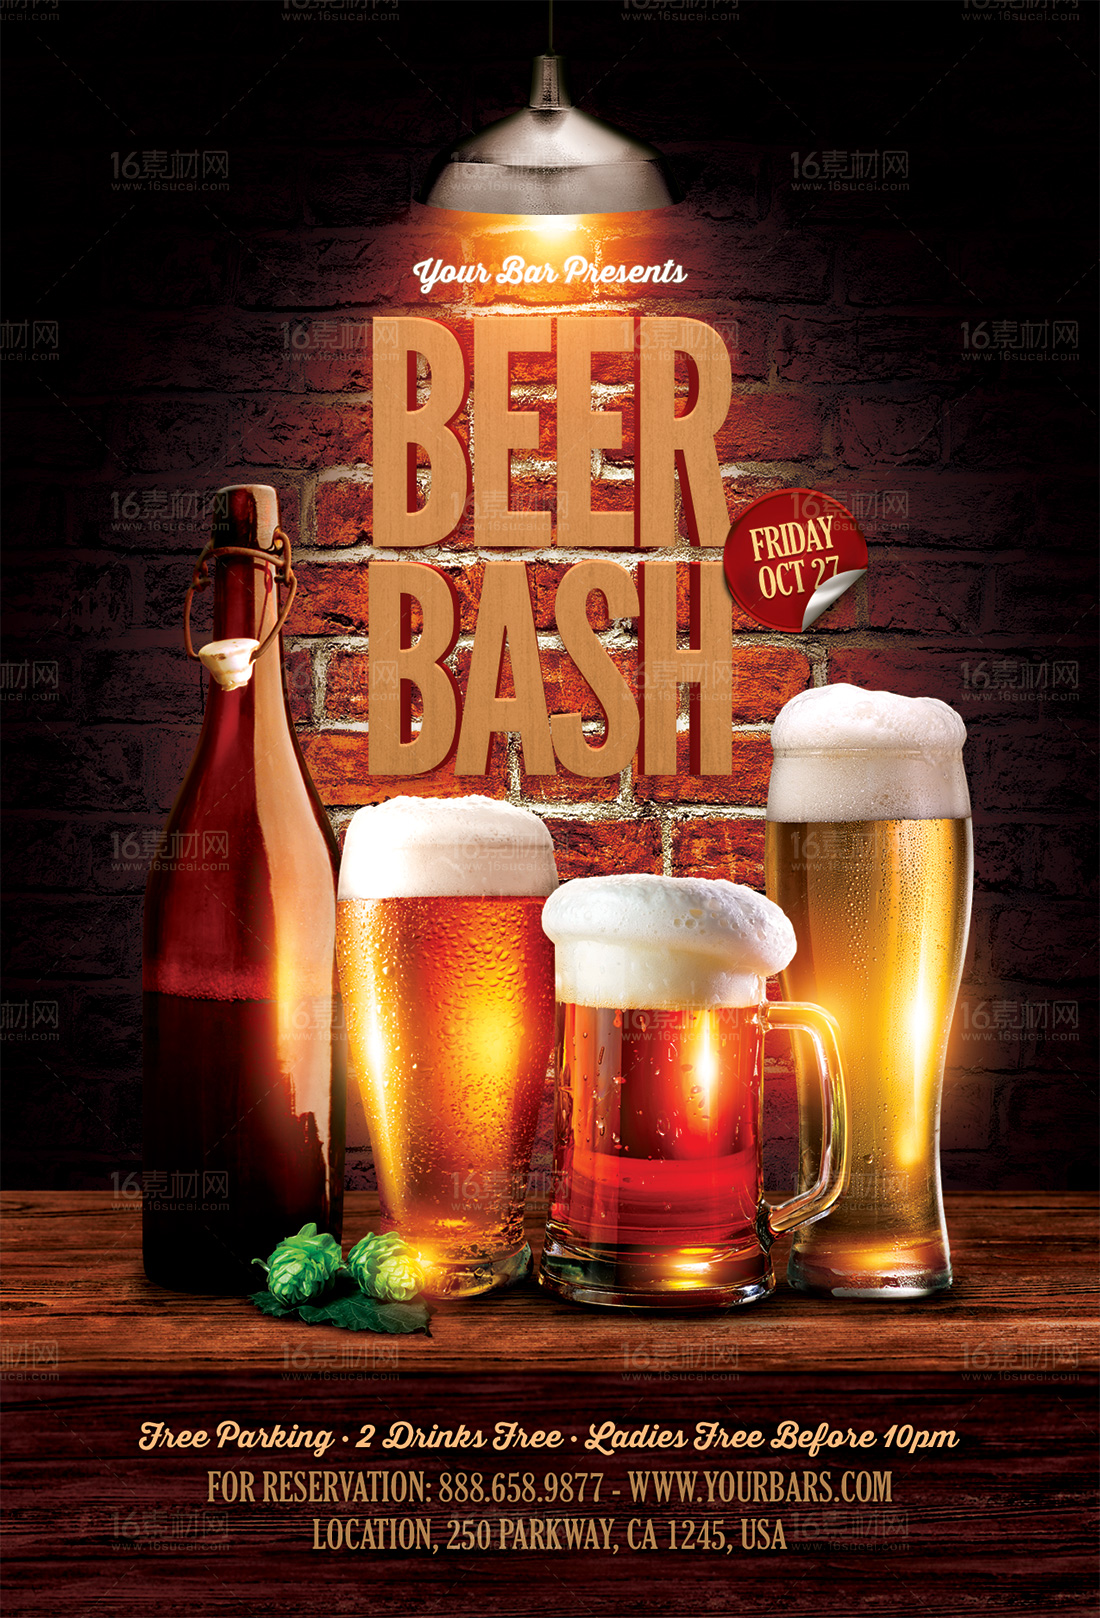 Beer-Bash-Flyer-Template-PSD.jpg